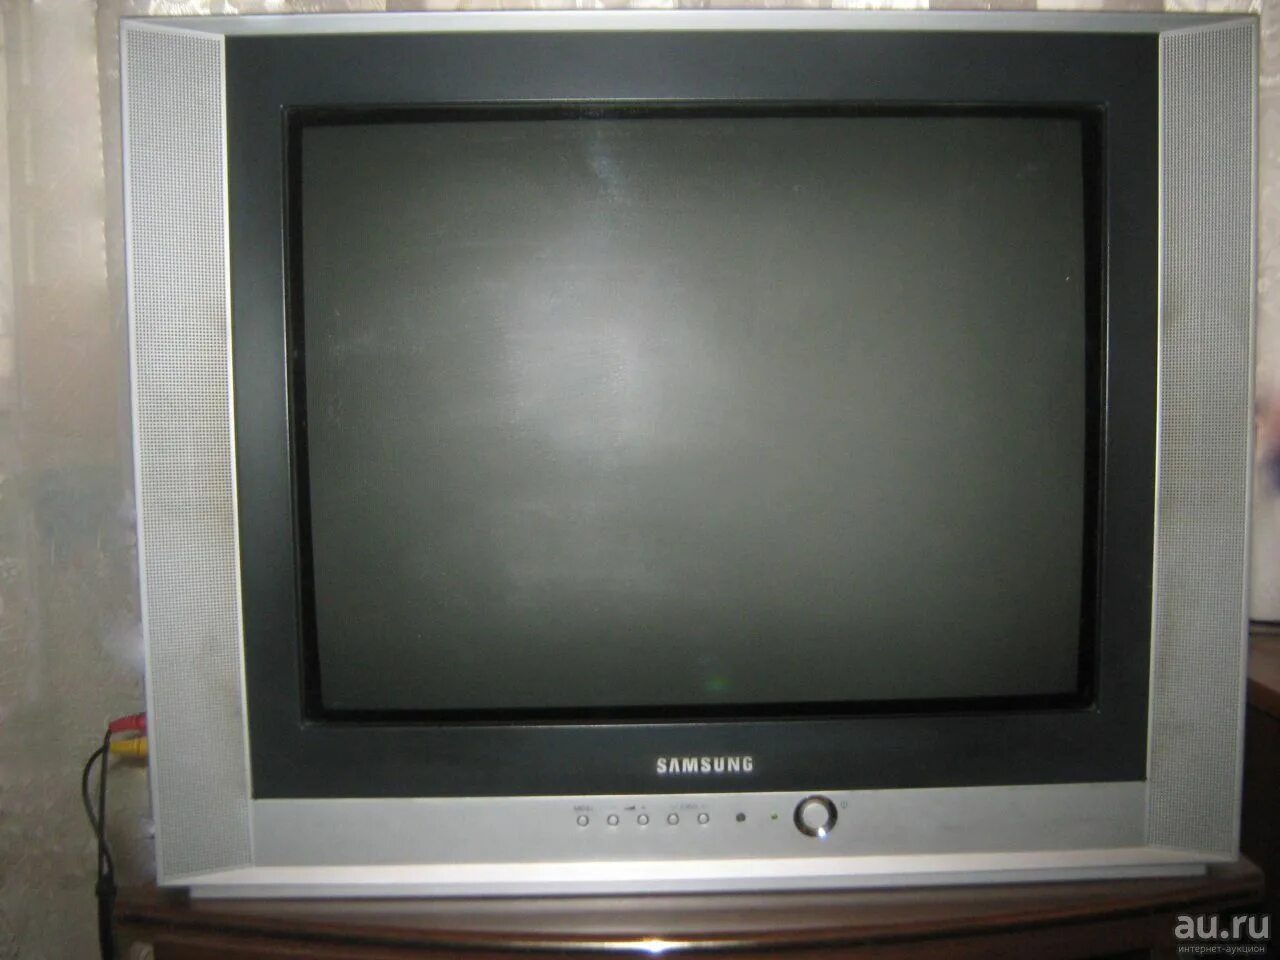 Samsung CS-21k30mjq. Телевизор самсунг СS- 21m6mqq. Телевизор Samsung CS-21k5sq 21". Samsung 21 дюйм кинескопный.